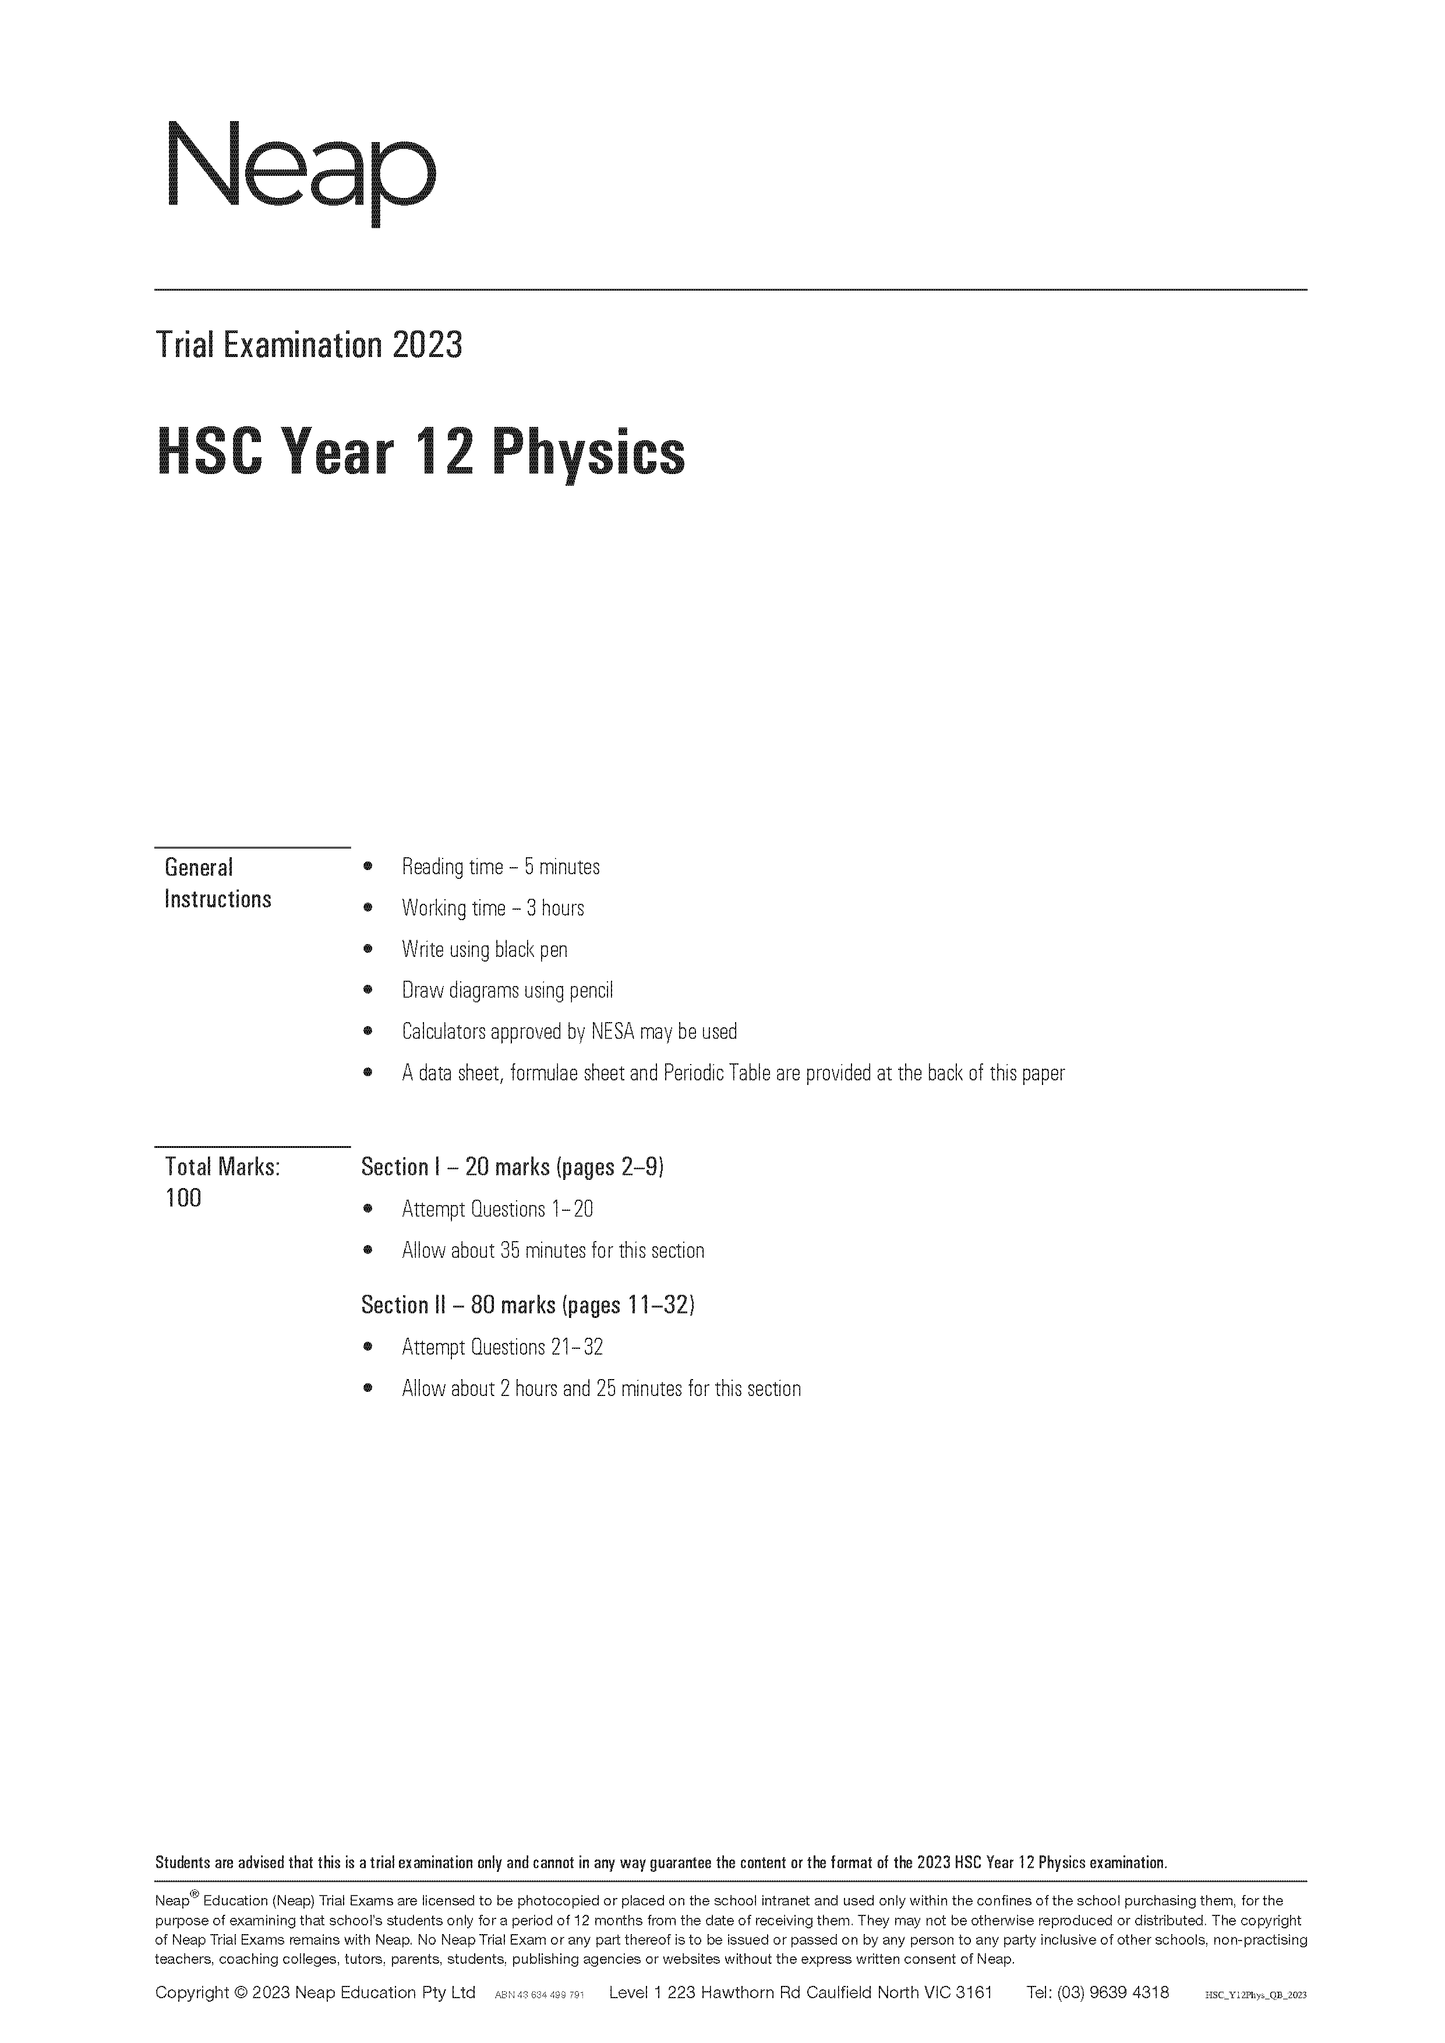 Neap Trial Exam: 2023 HSC Year 12 Physics